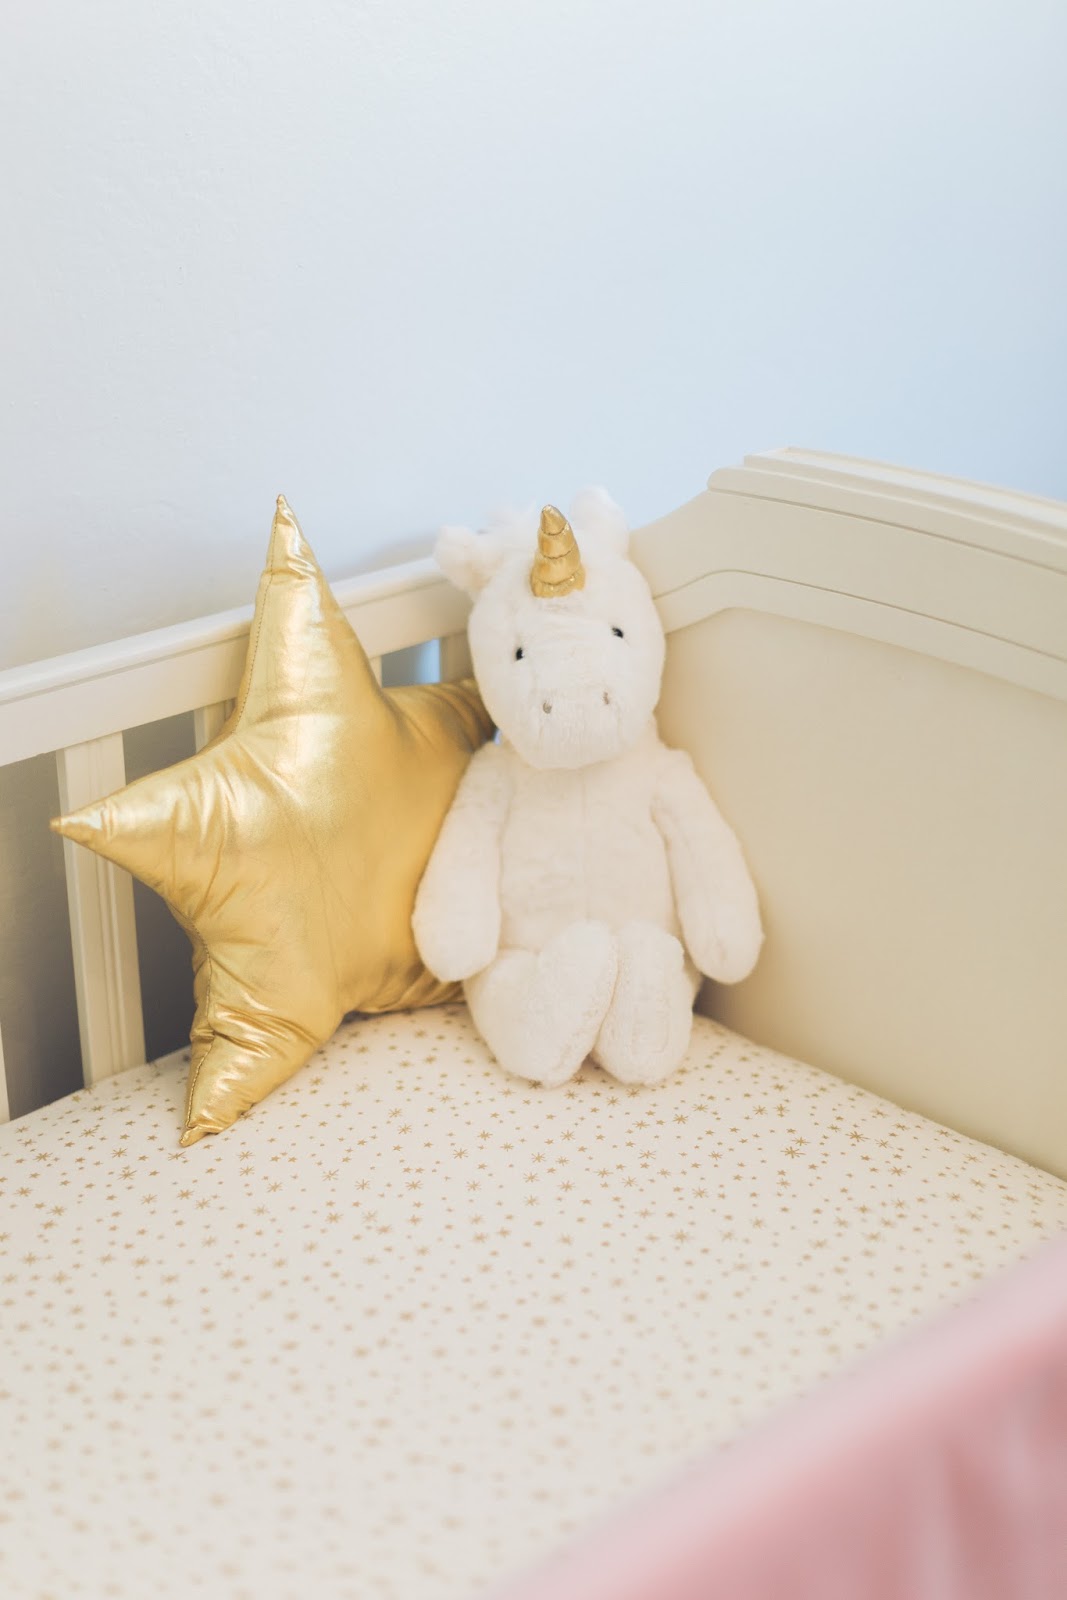 Baby Girl Nursery ideas from popular blogger, The Celebration Stylist